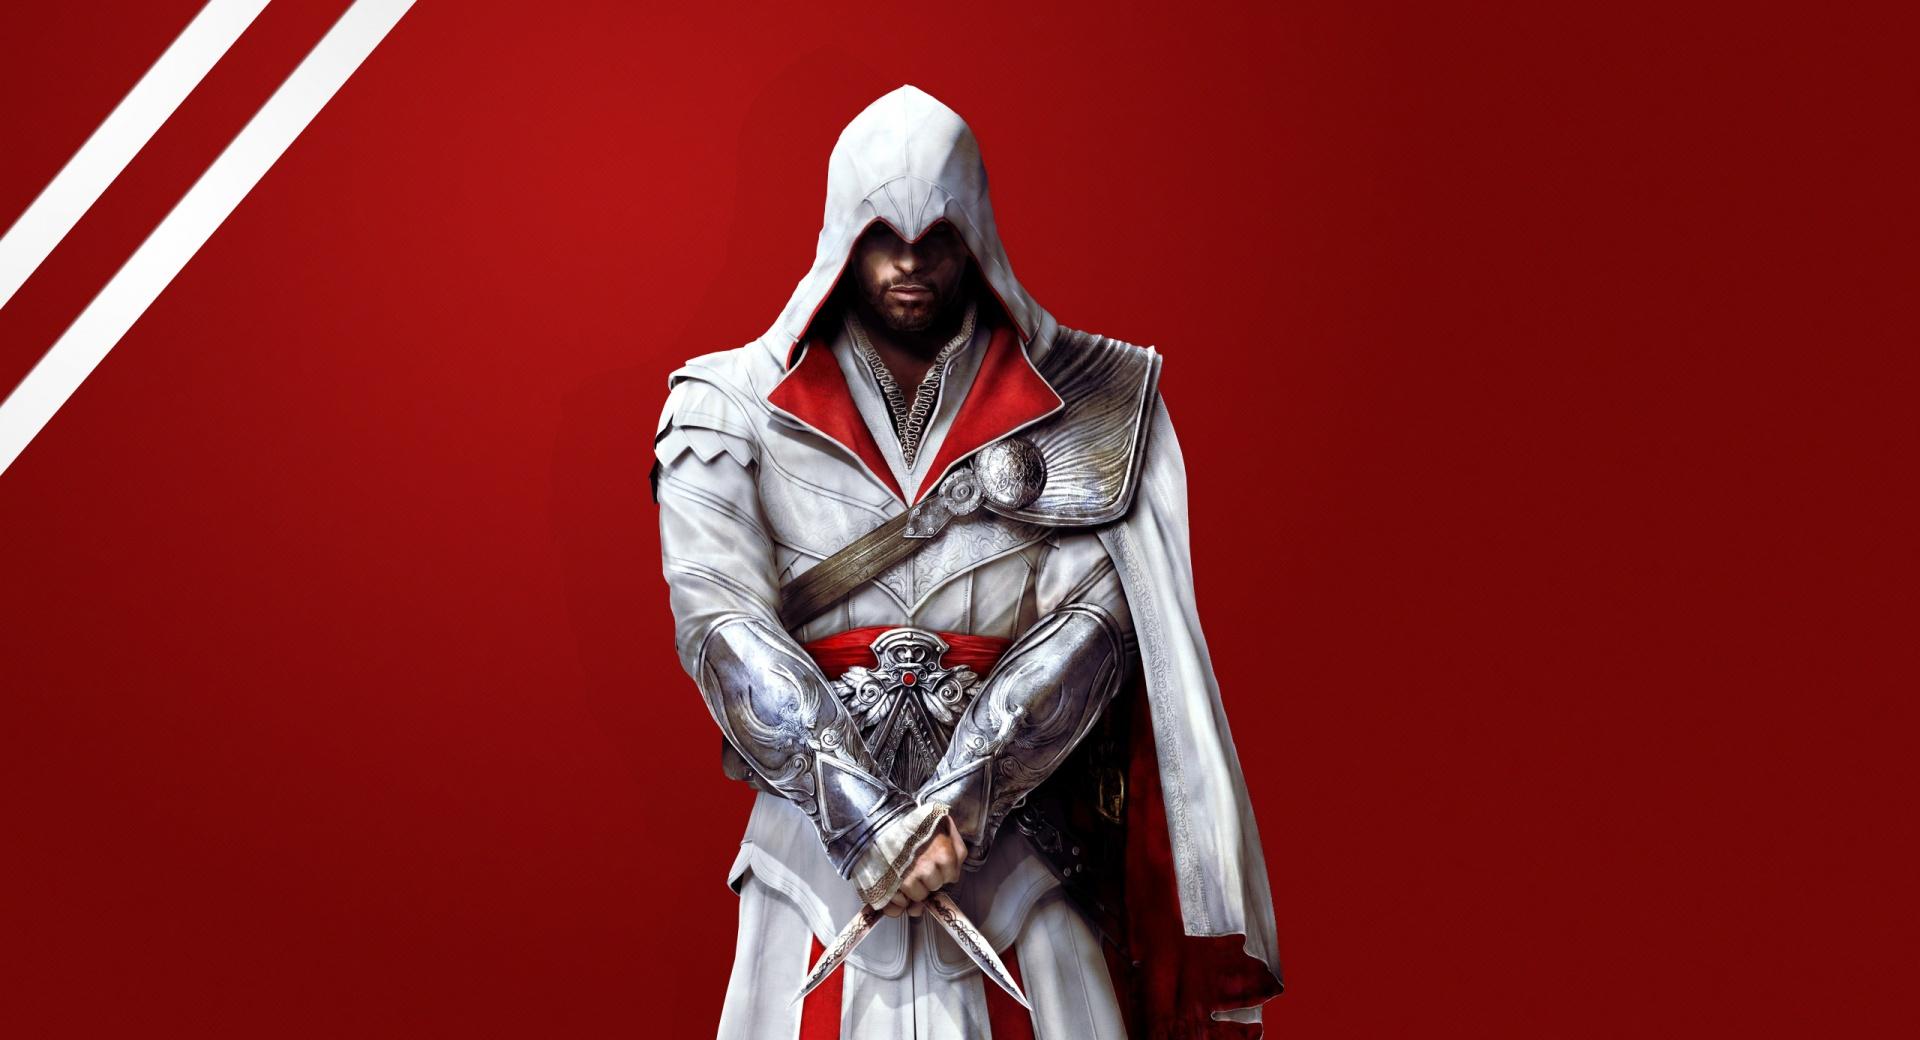 Assassins Creed Brotherhood - Ezio at 2048 x 2048 iPad size wallpapers HD quality